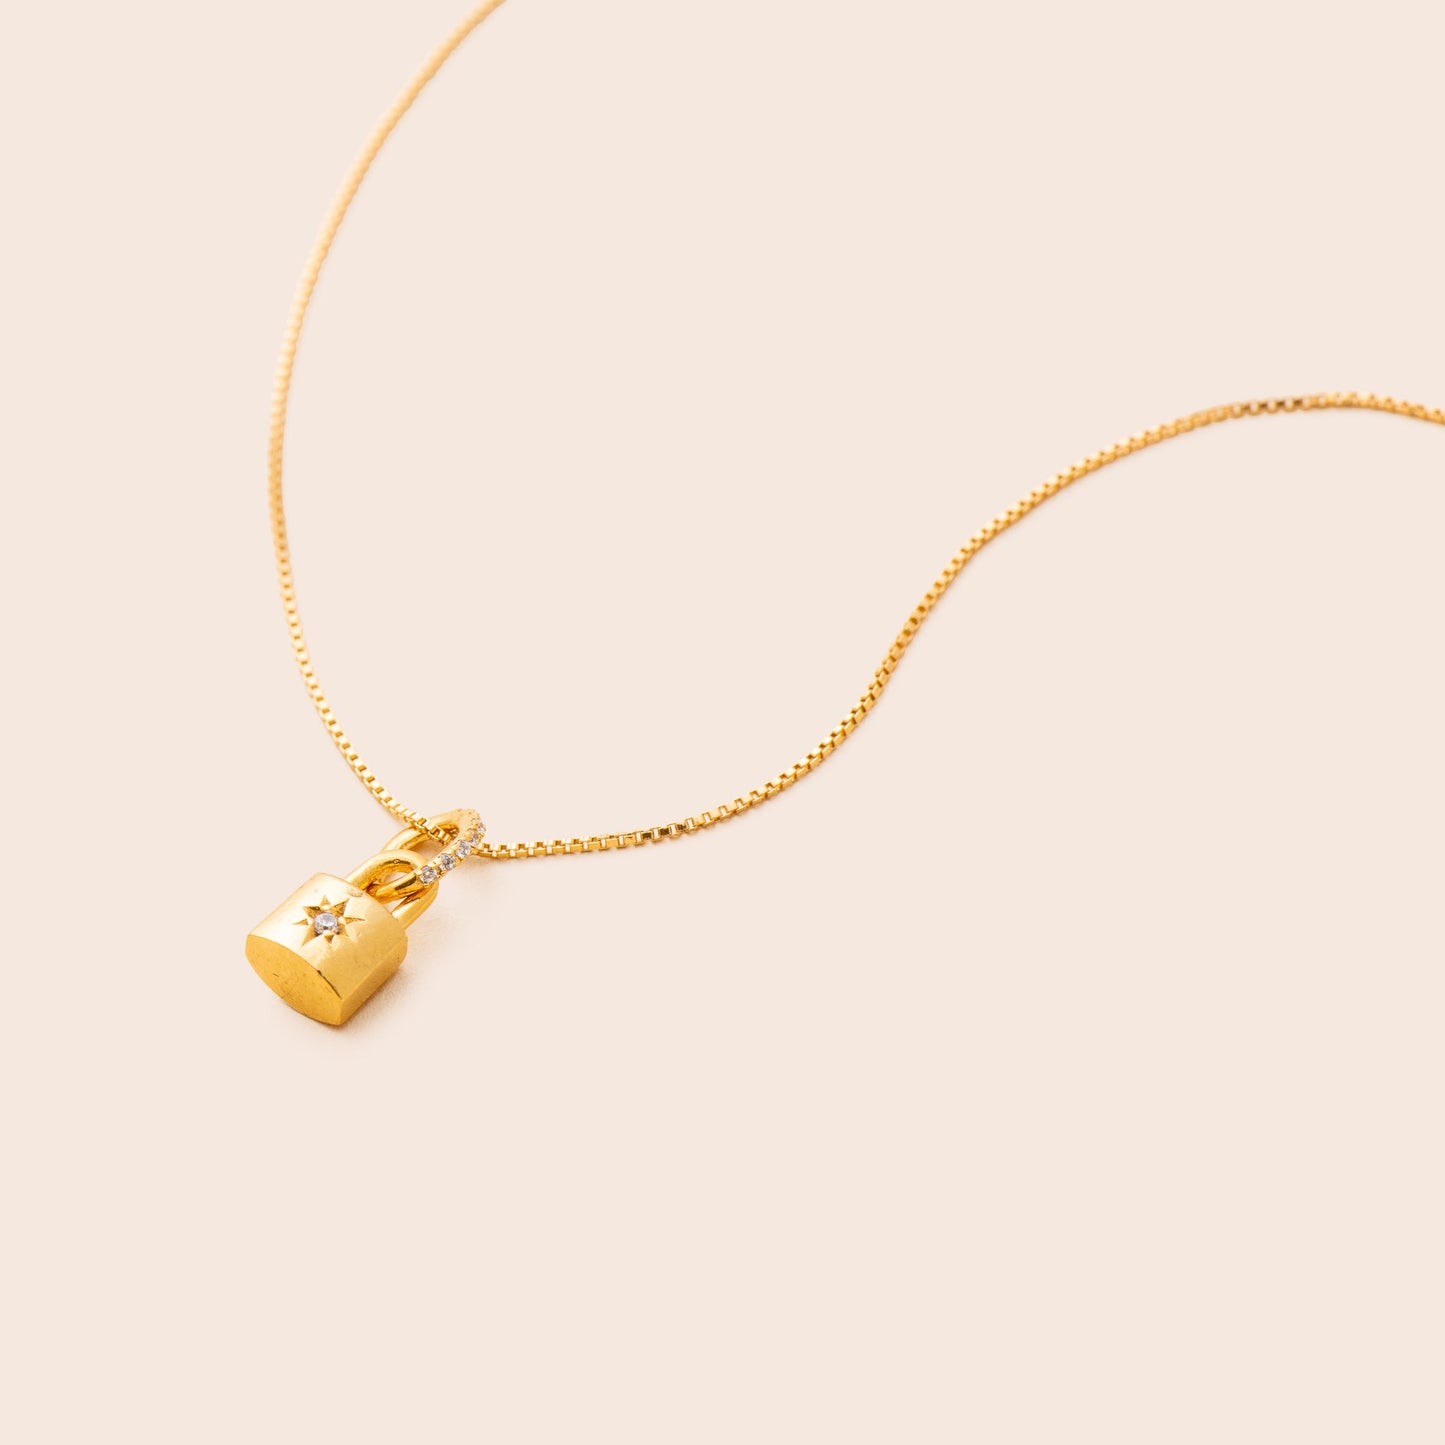 Northern Star Padlock Necklace - Gold Filled - Gemlet